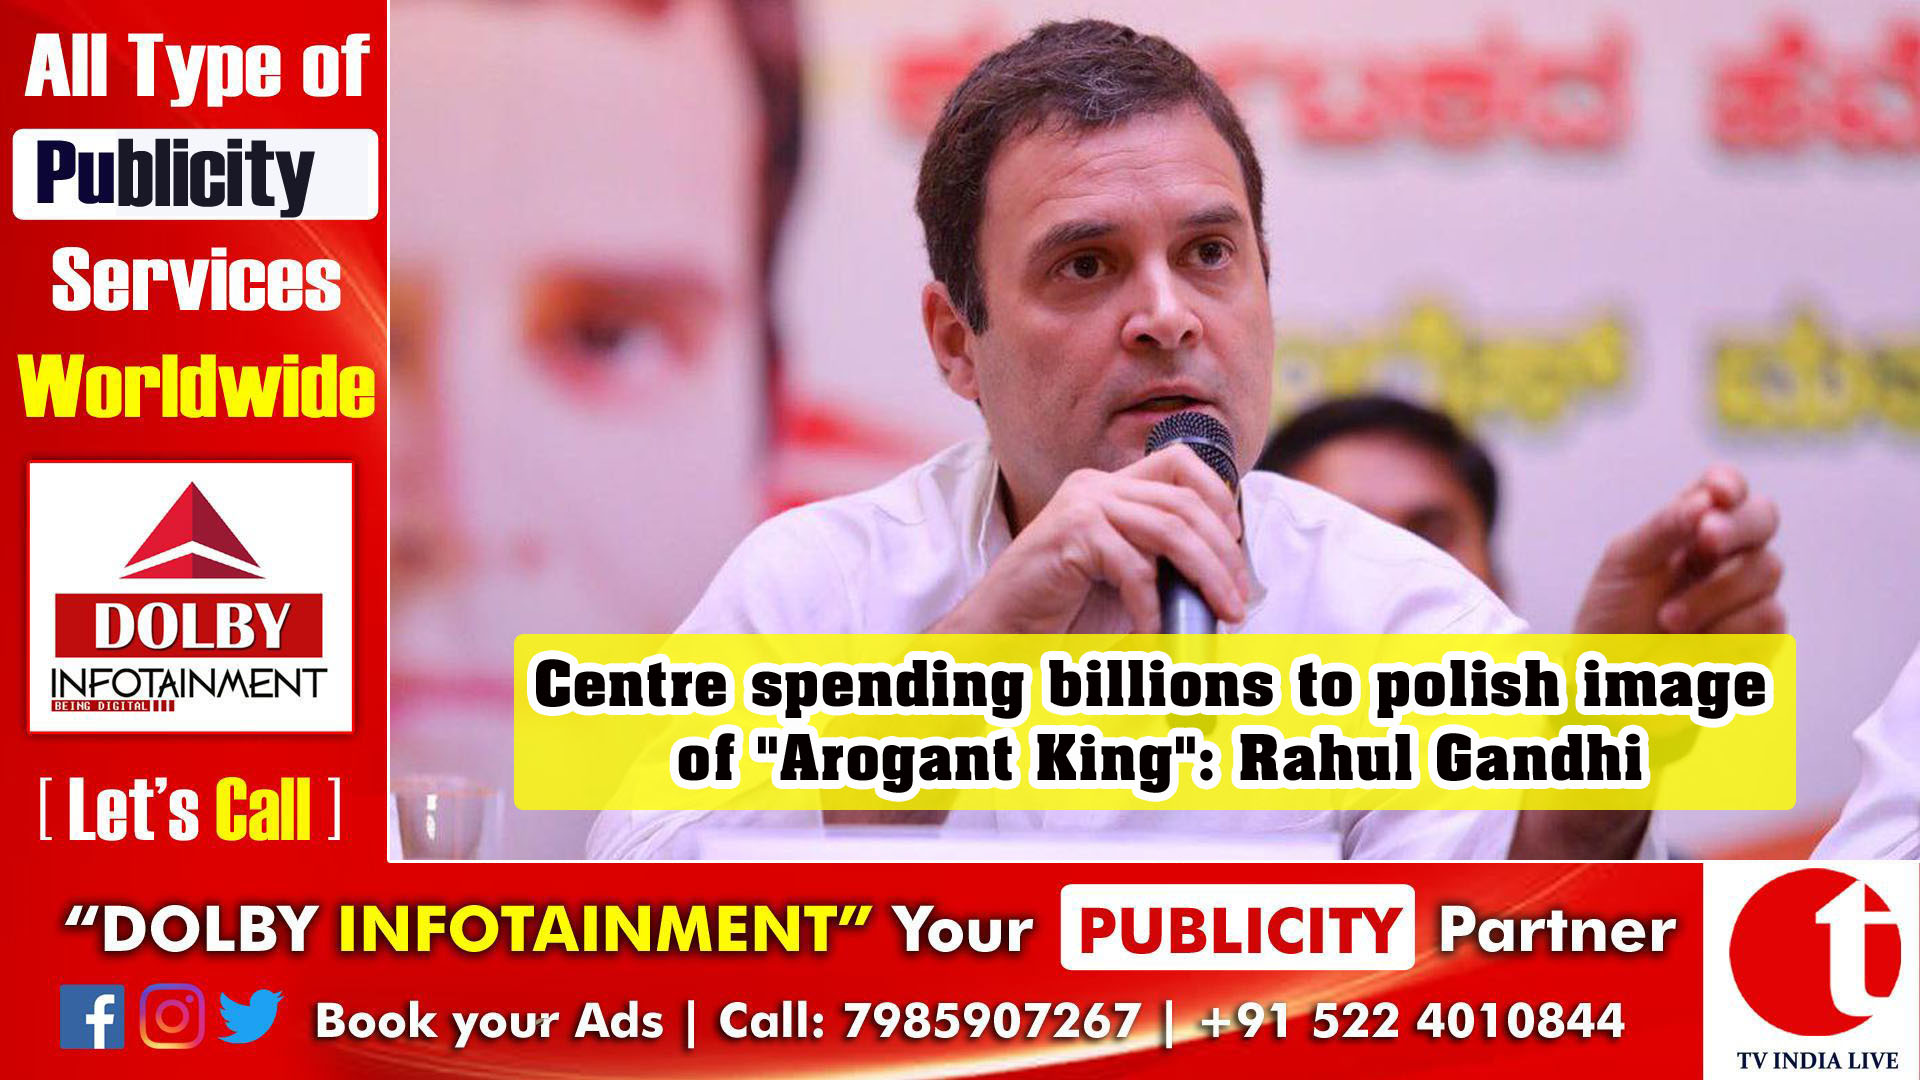 Centre spending billions to polish image of "Arogant King": Rahul Gandhi